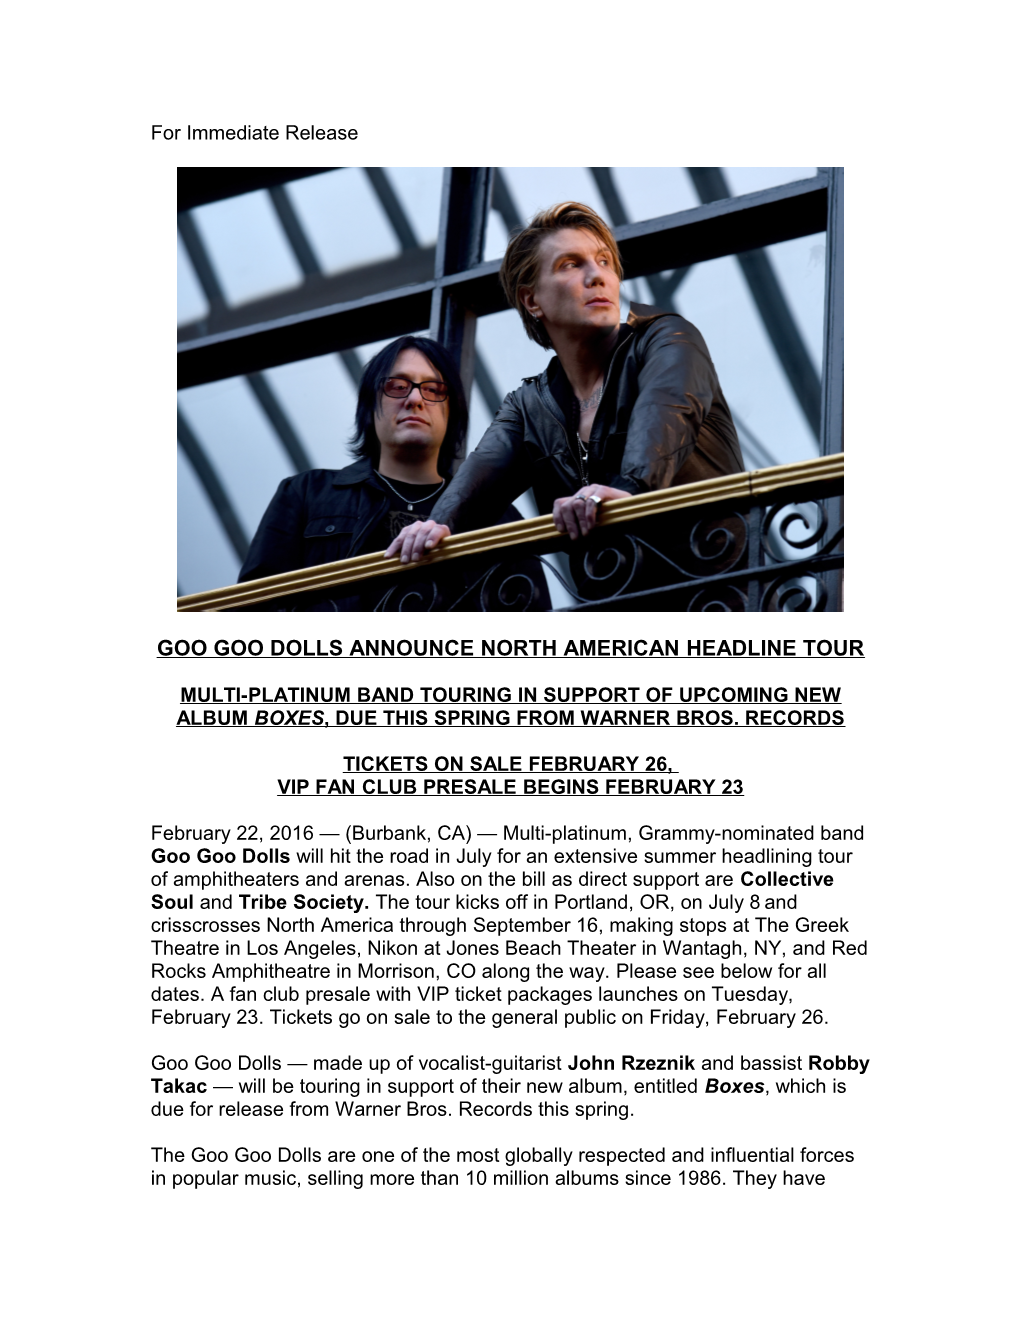 Goo Goo Dolls Announce North American Headline Tour